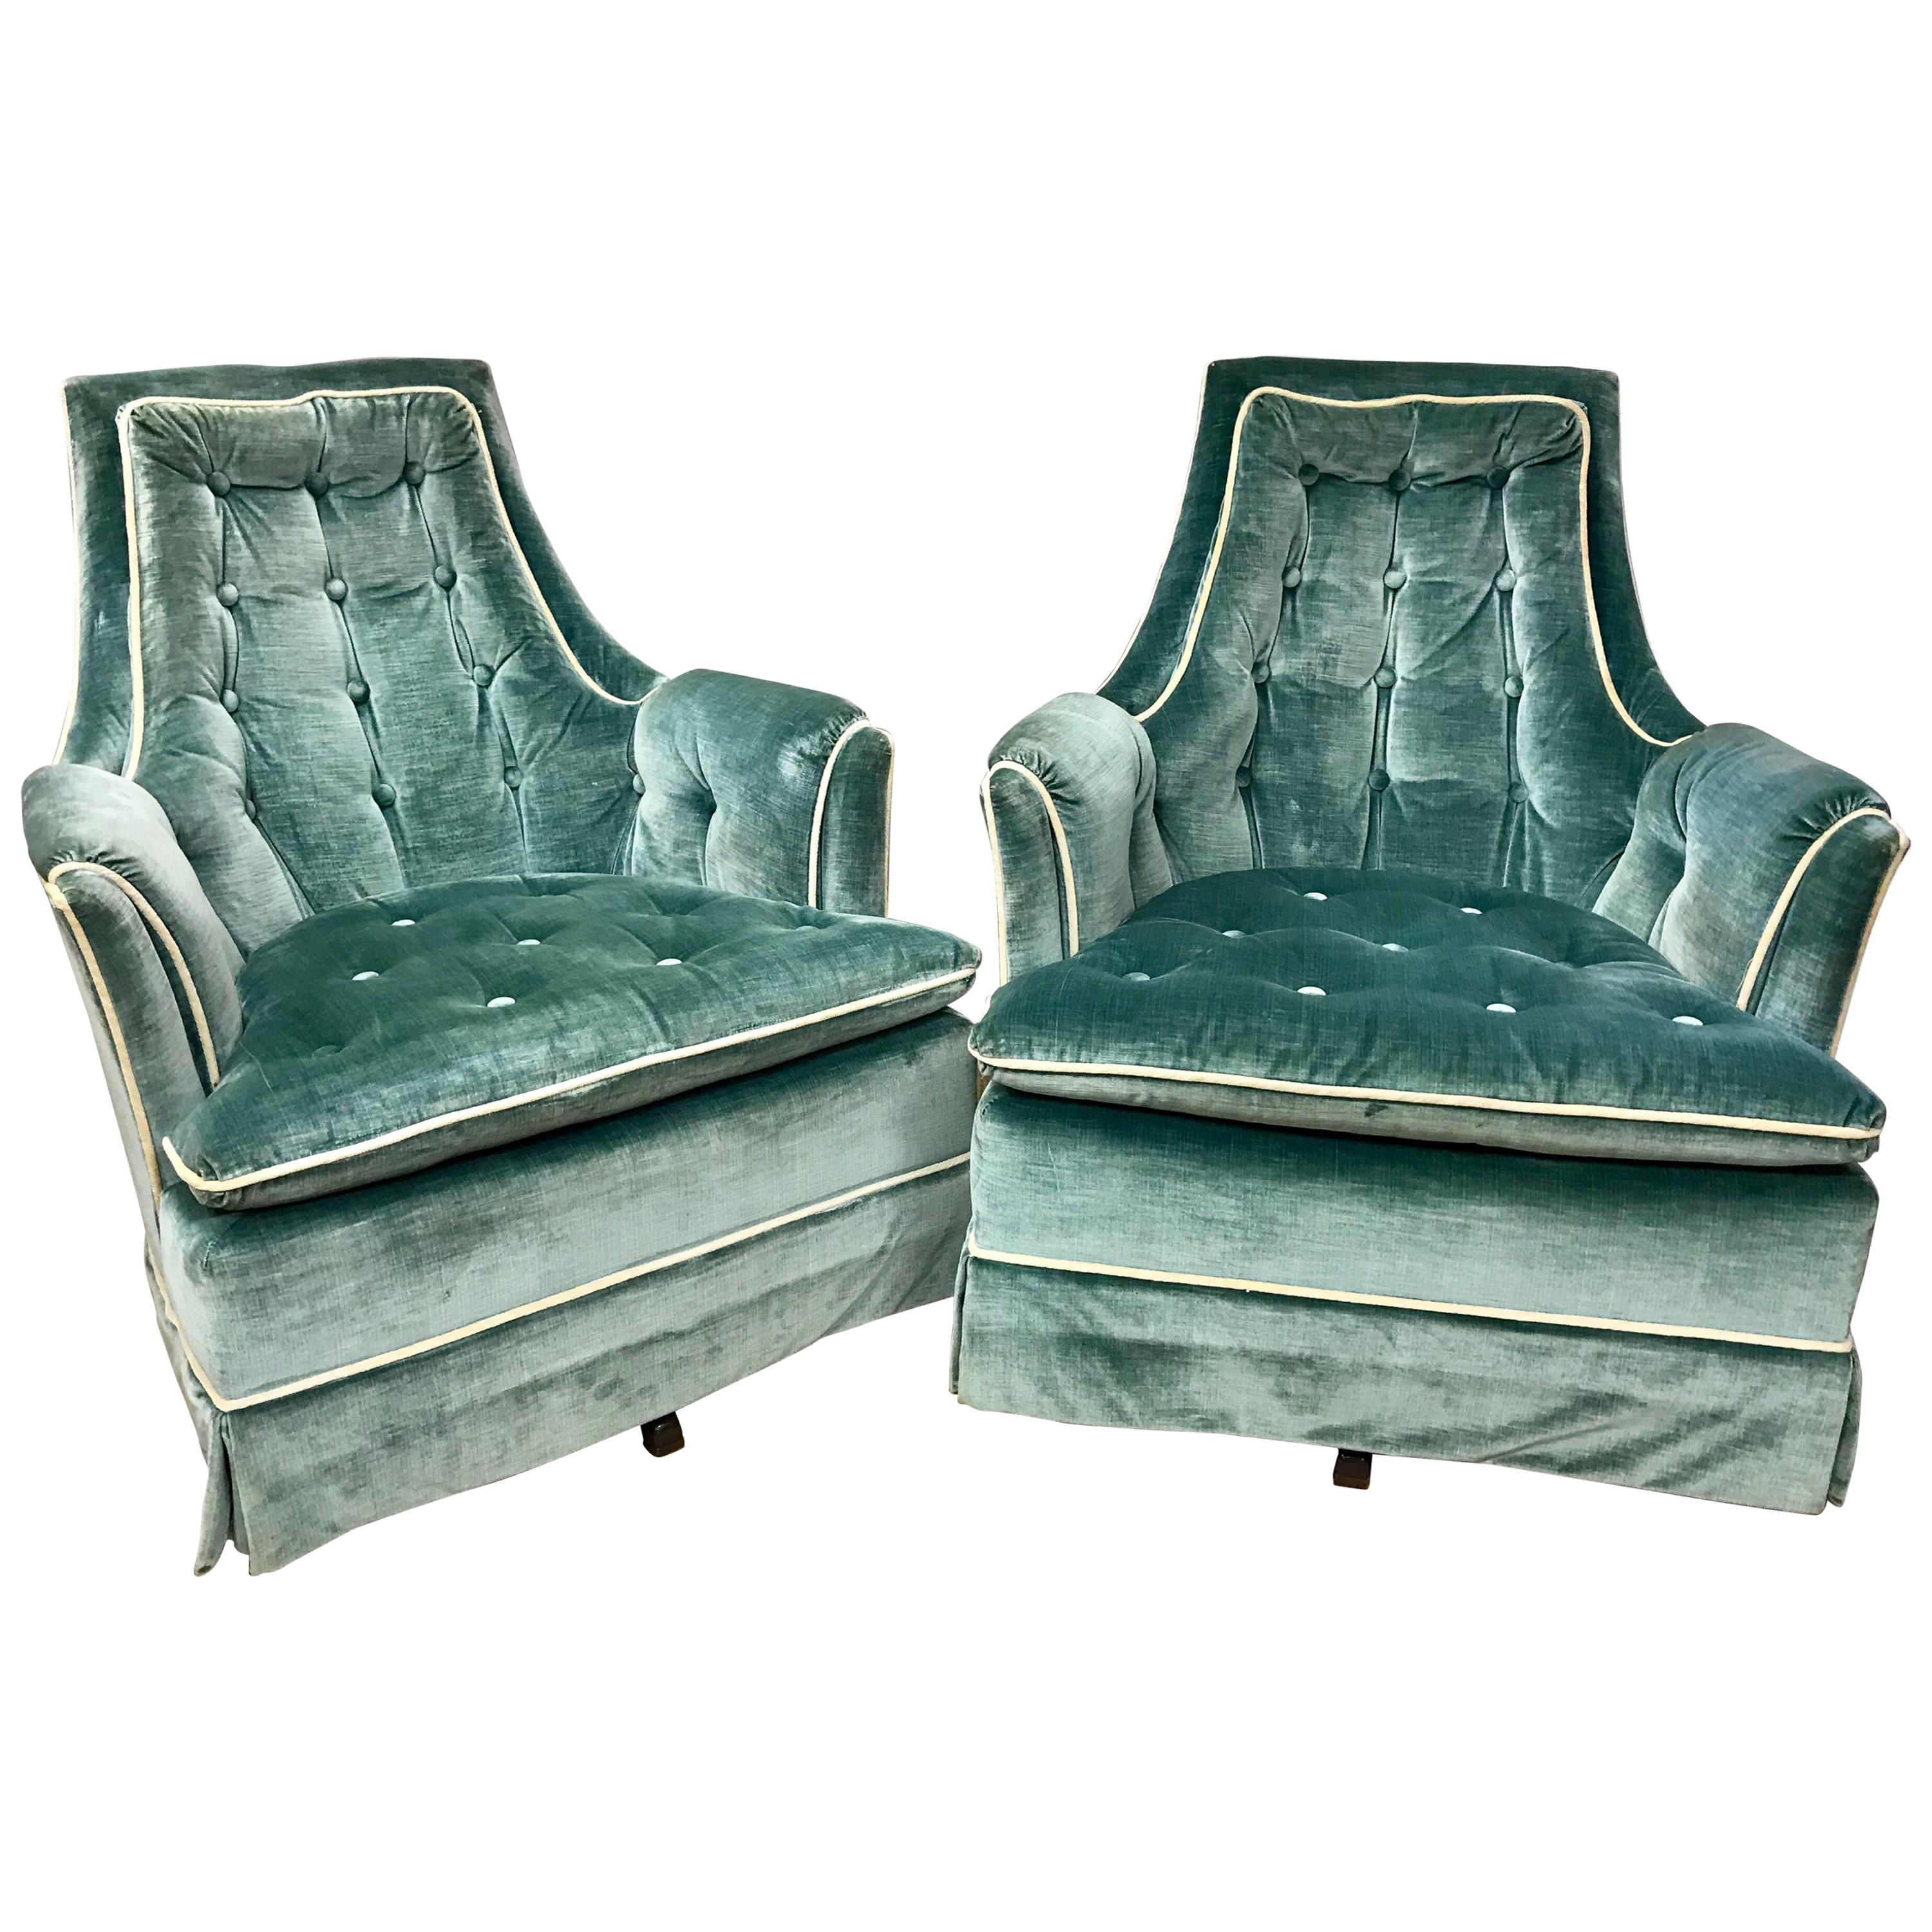 Pair of Vintage Drexel Velvet Tufted Swivel Chairs Rockers